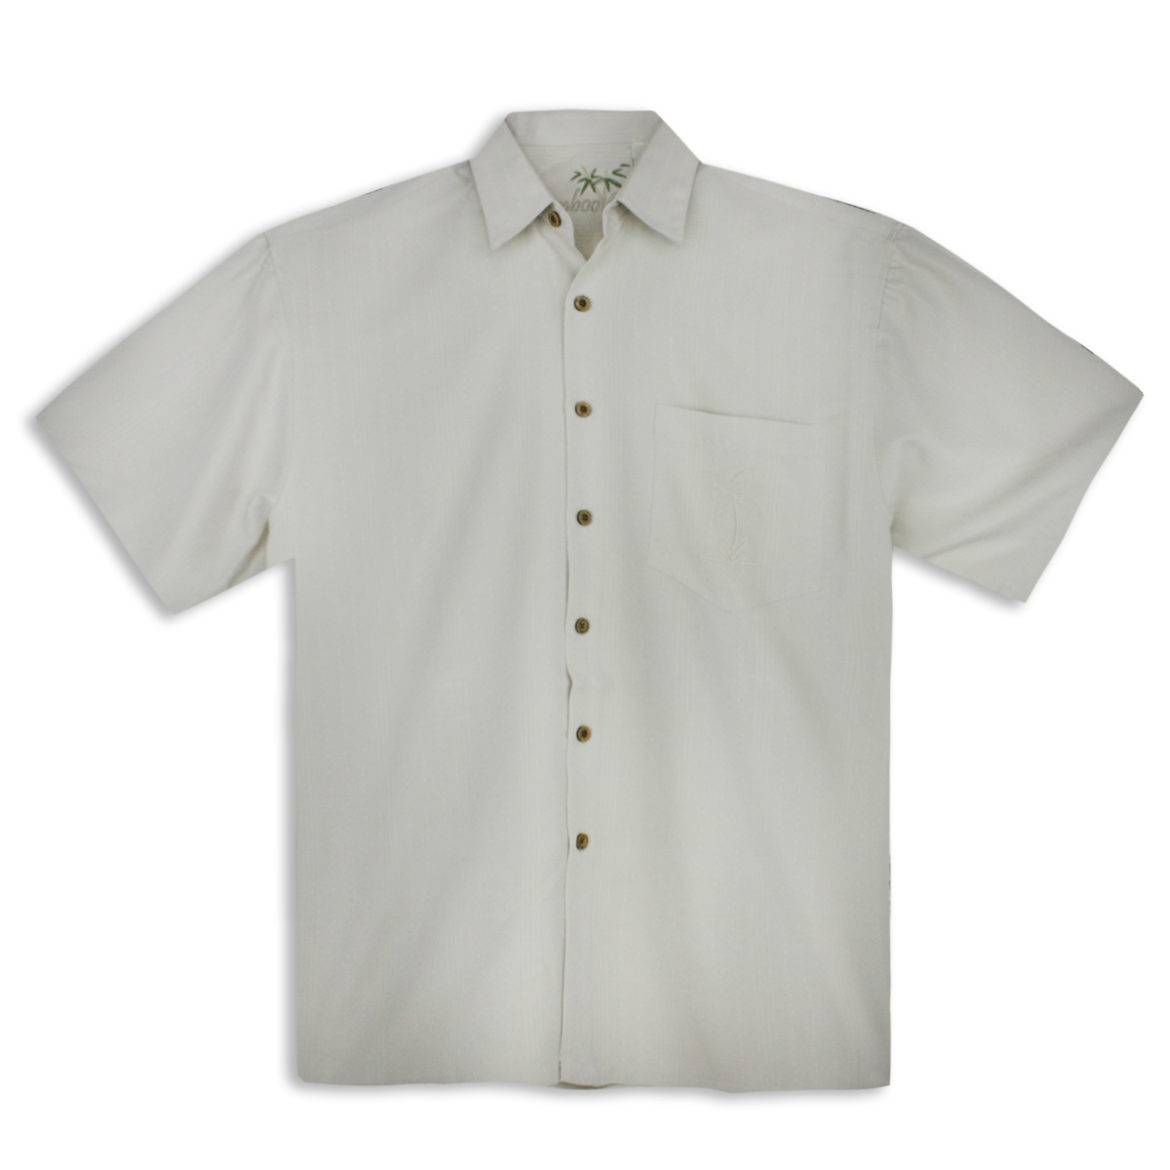 Fine Mens Resortwear Shirt . Bamboo Cay -Hidden Palm-Cream- Easy Care Handsome Island Vacation Shirt.